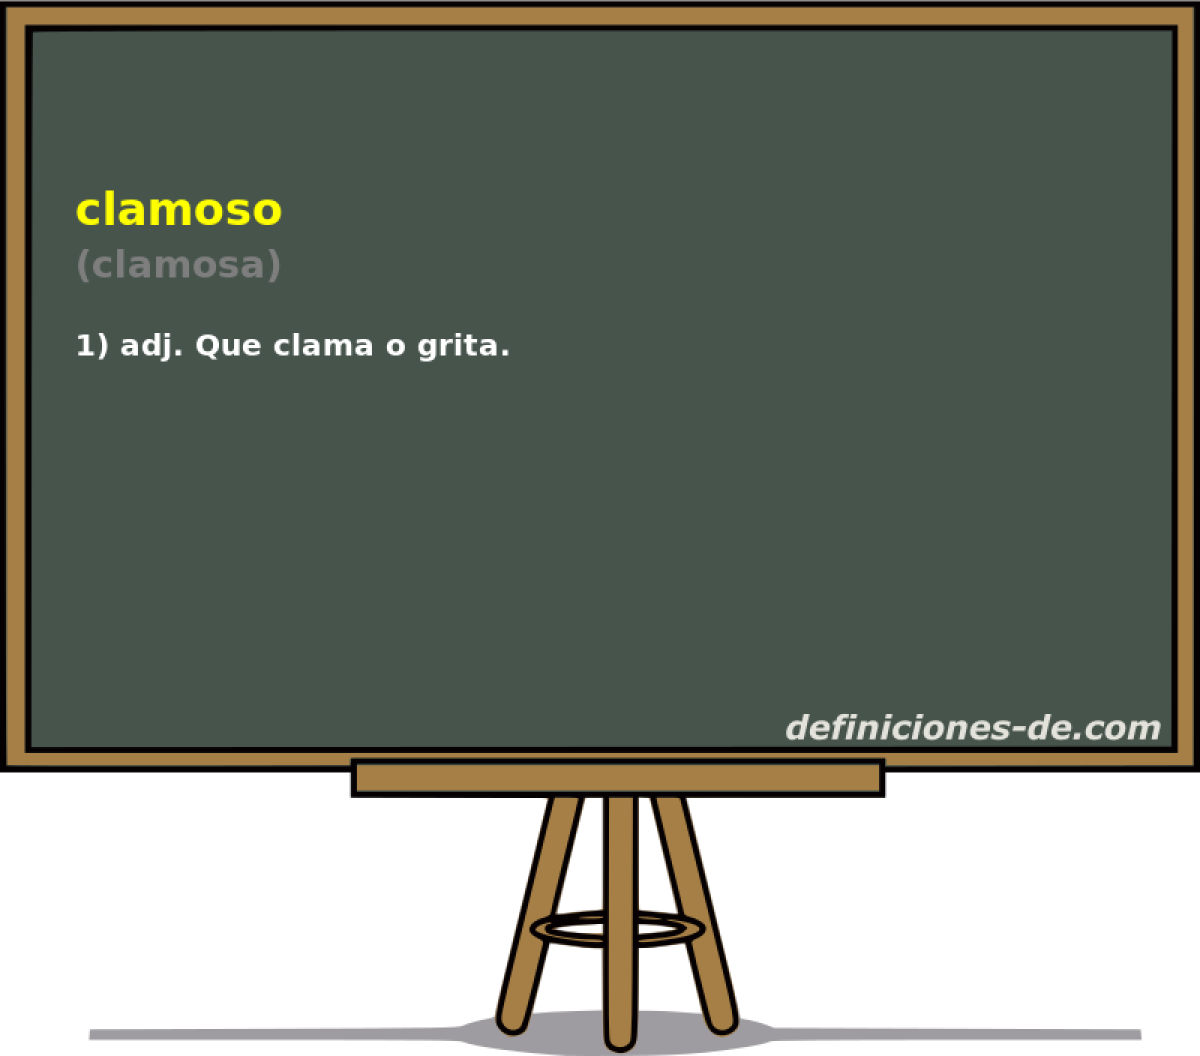 clamoso (clamosa)